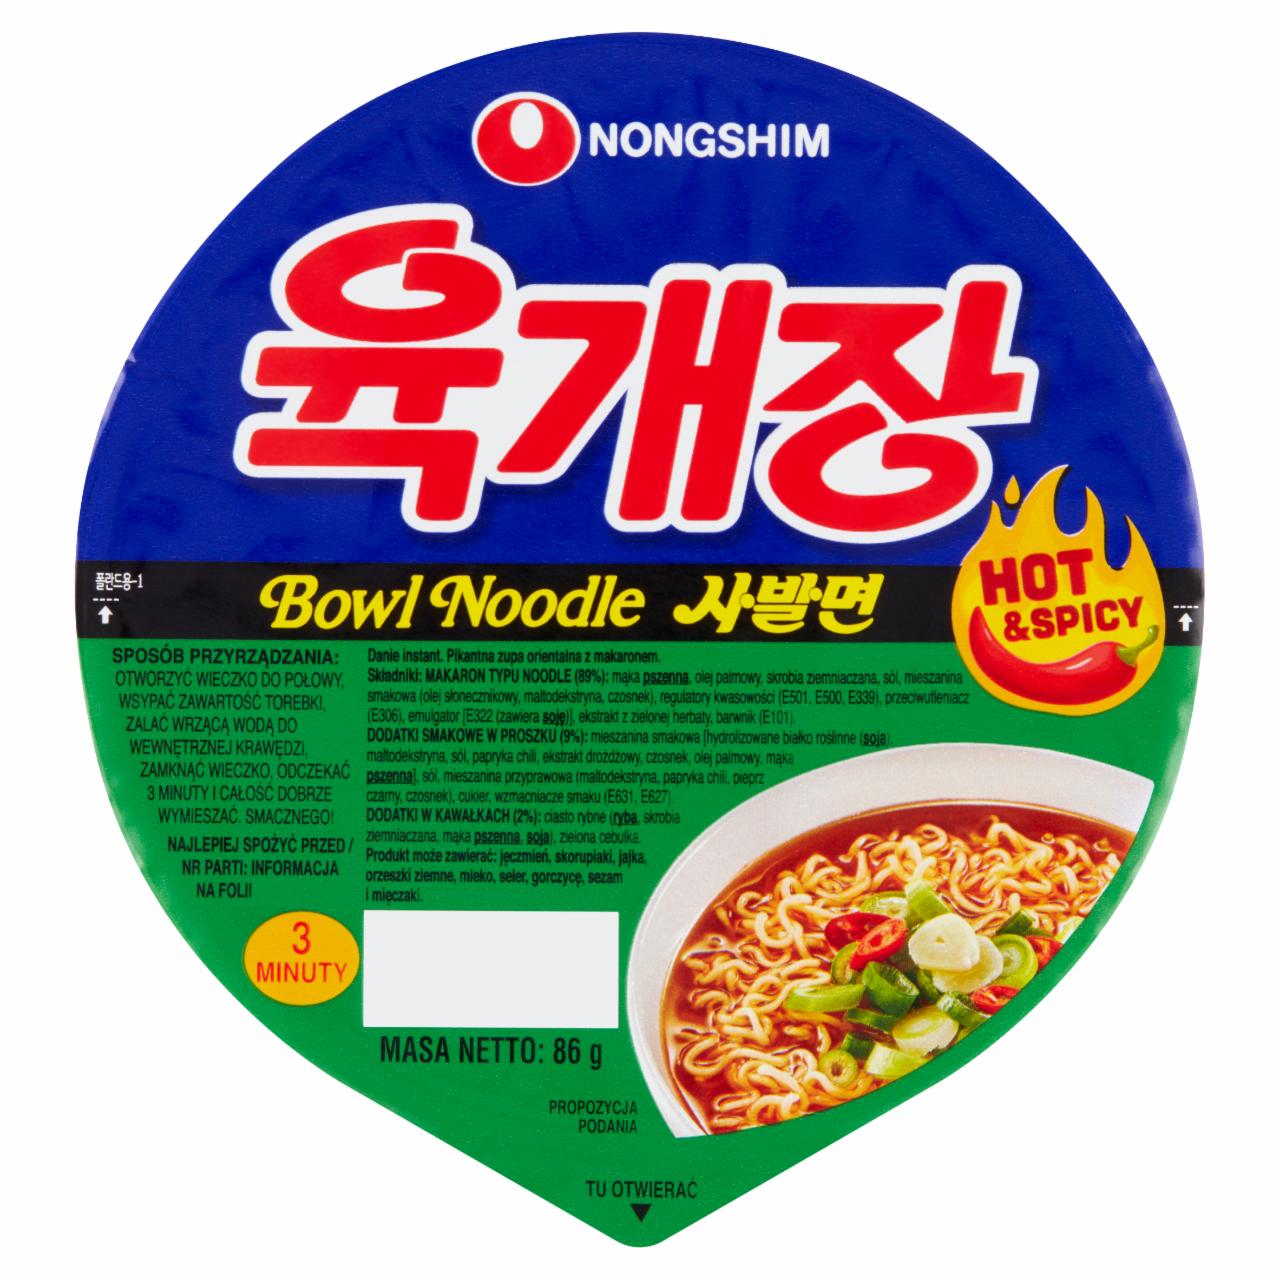 Zdjęcia - Bowl Noodles Hot & Spicy Nongshim